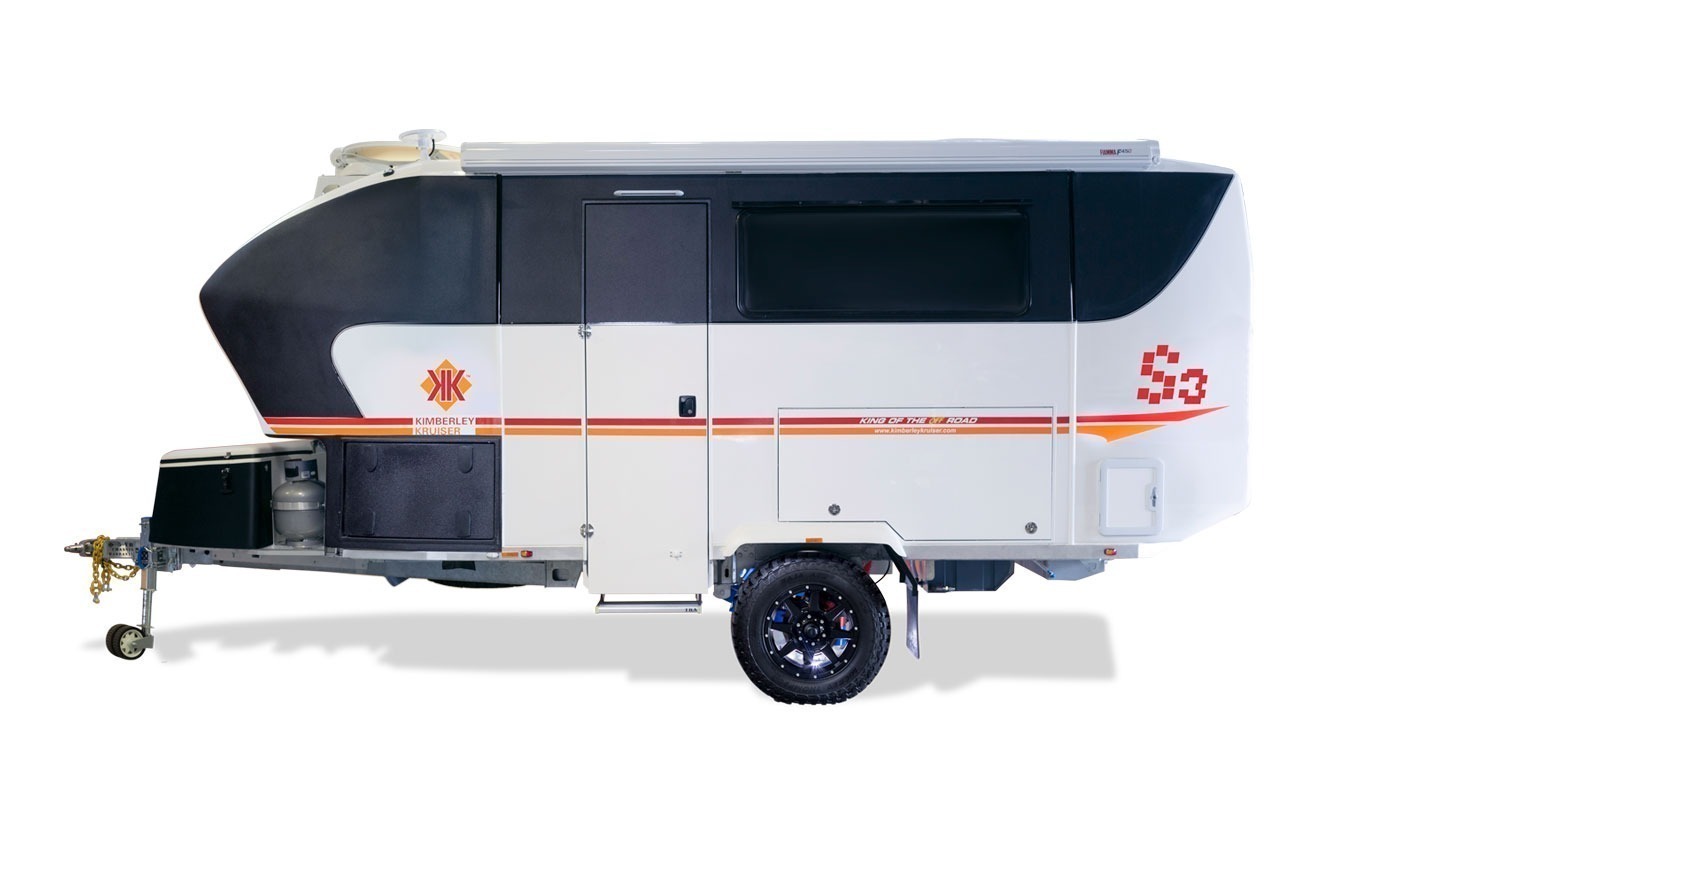 S-Class Caravan for Sale in Australia | Kimberley Kampers Australia